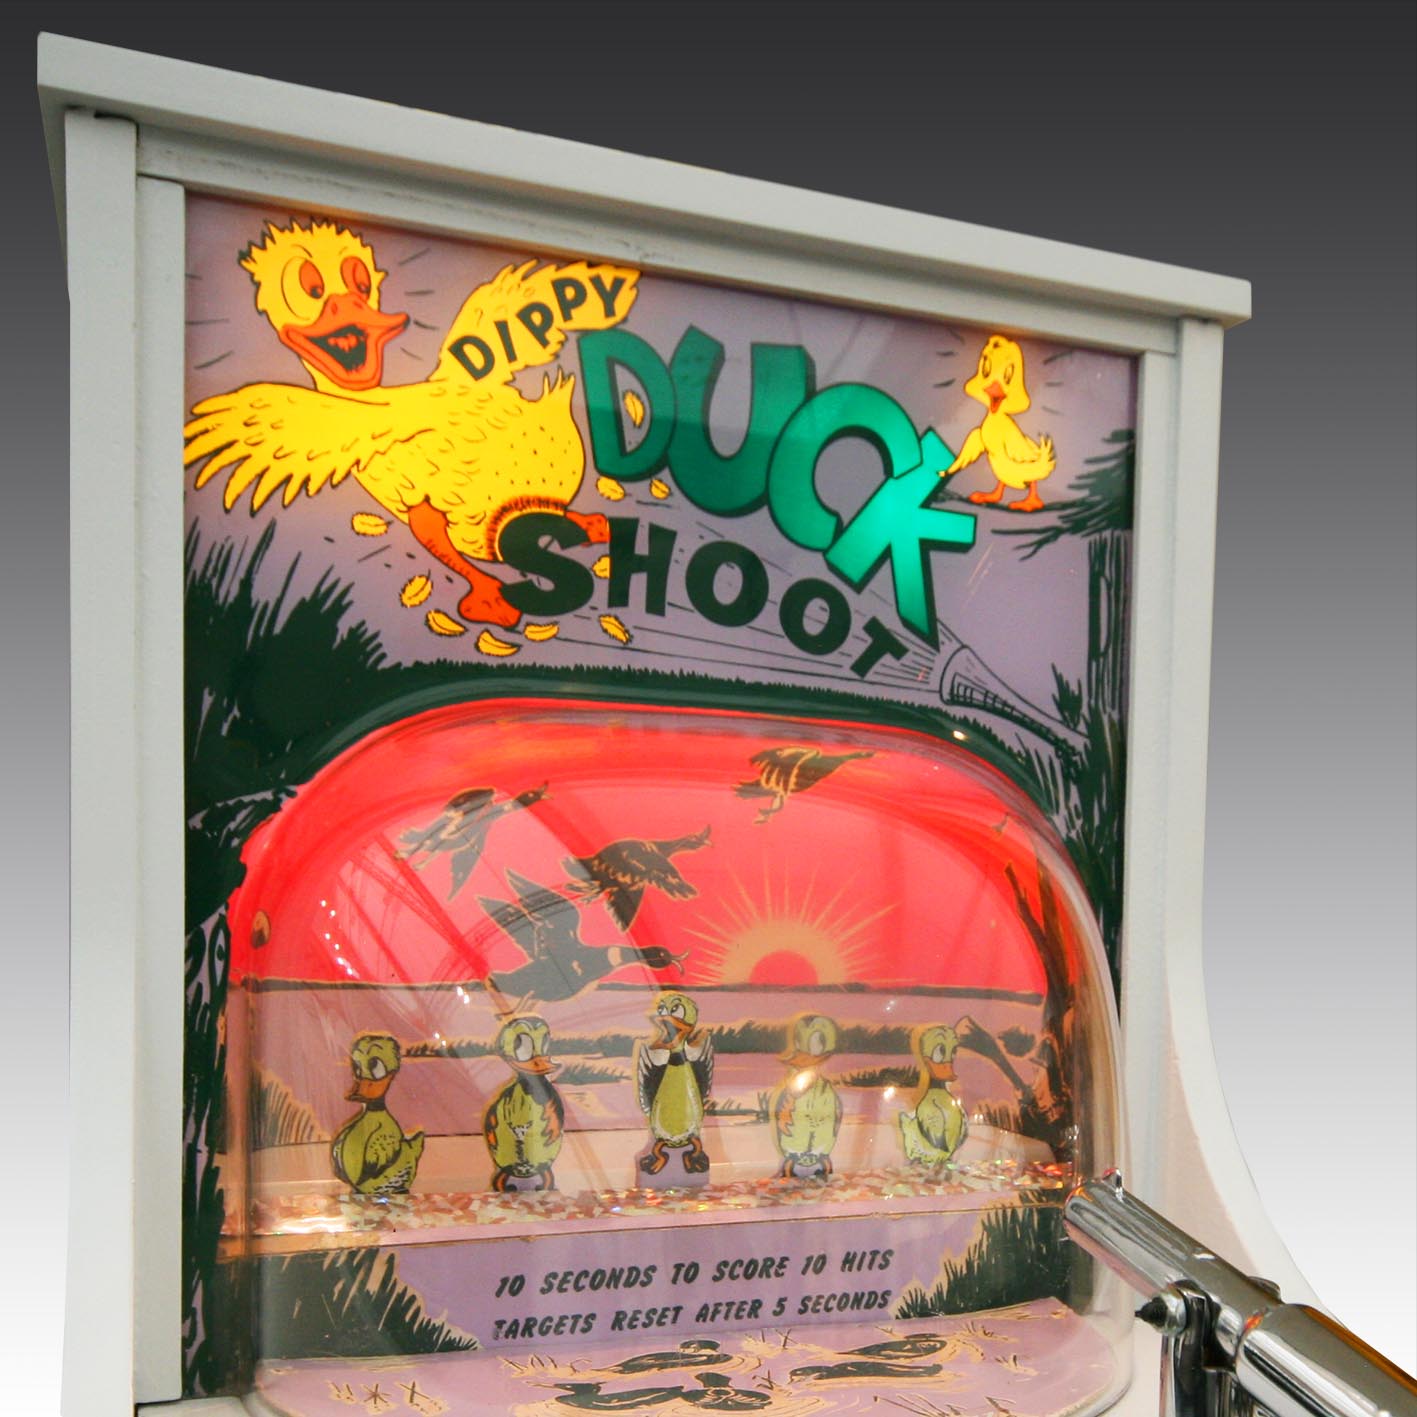 Dippy Duck Shoot Arcade Machine